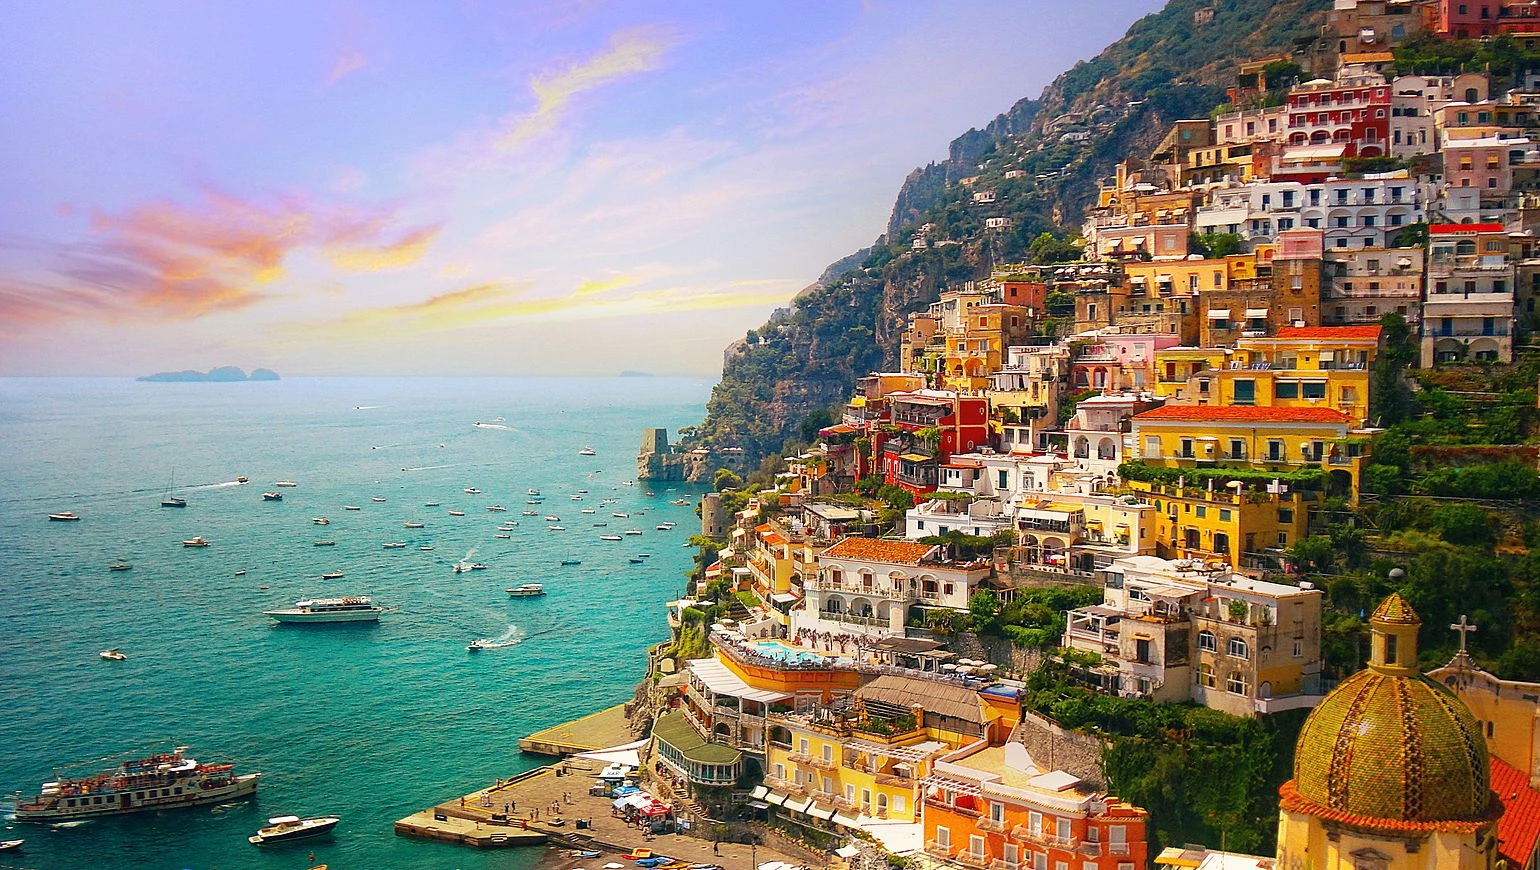 Descubre la belleza de la Costa Amalfitana